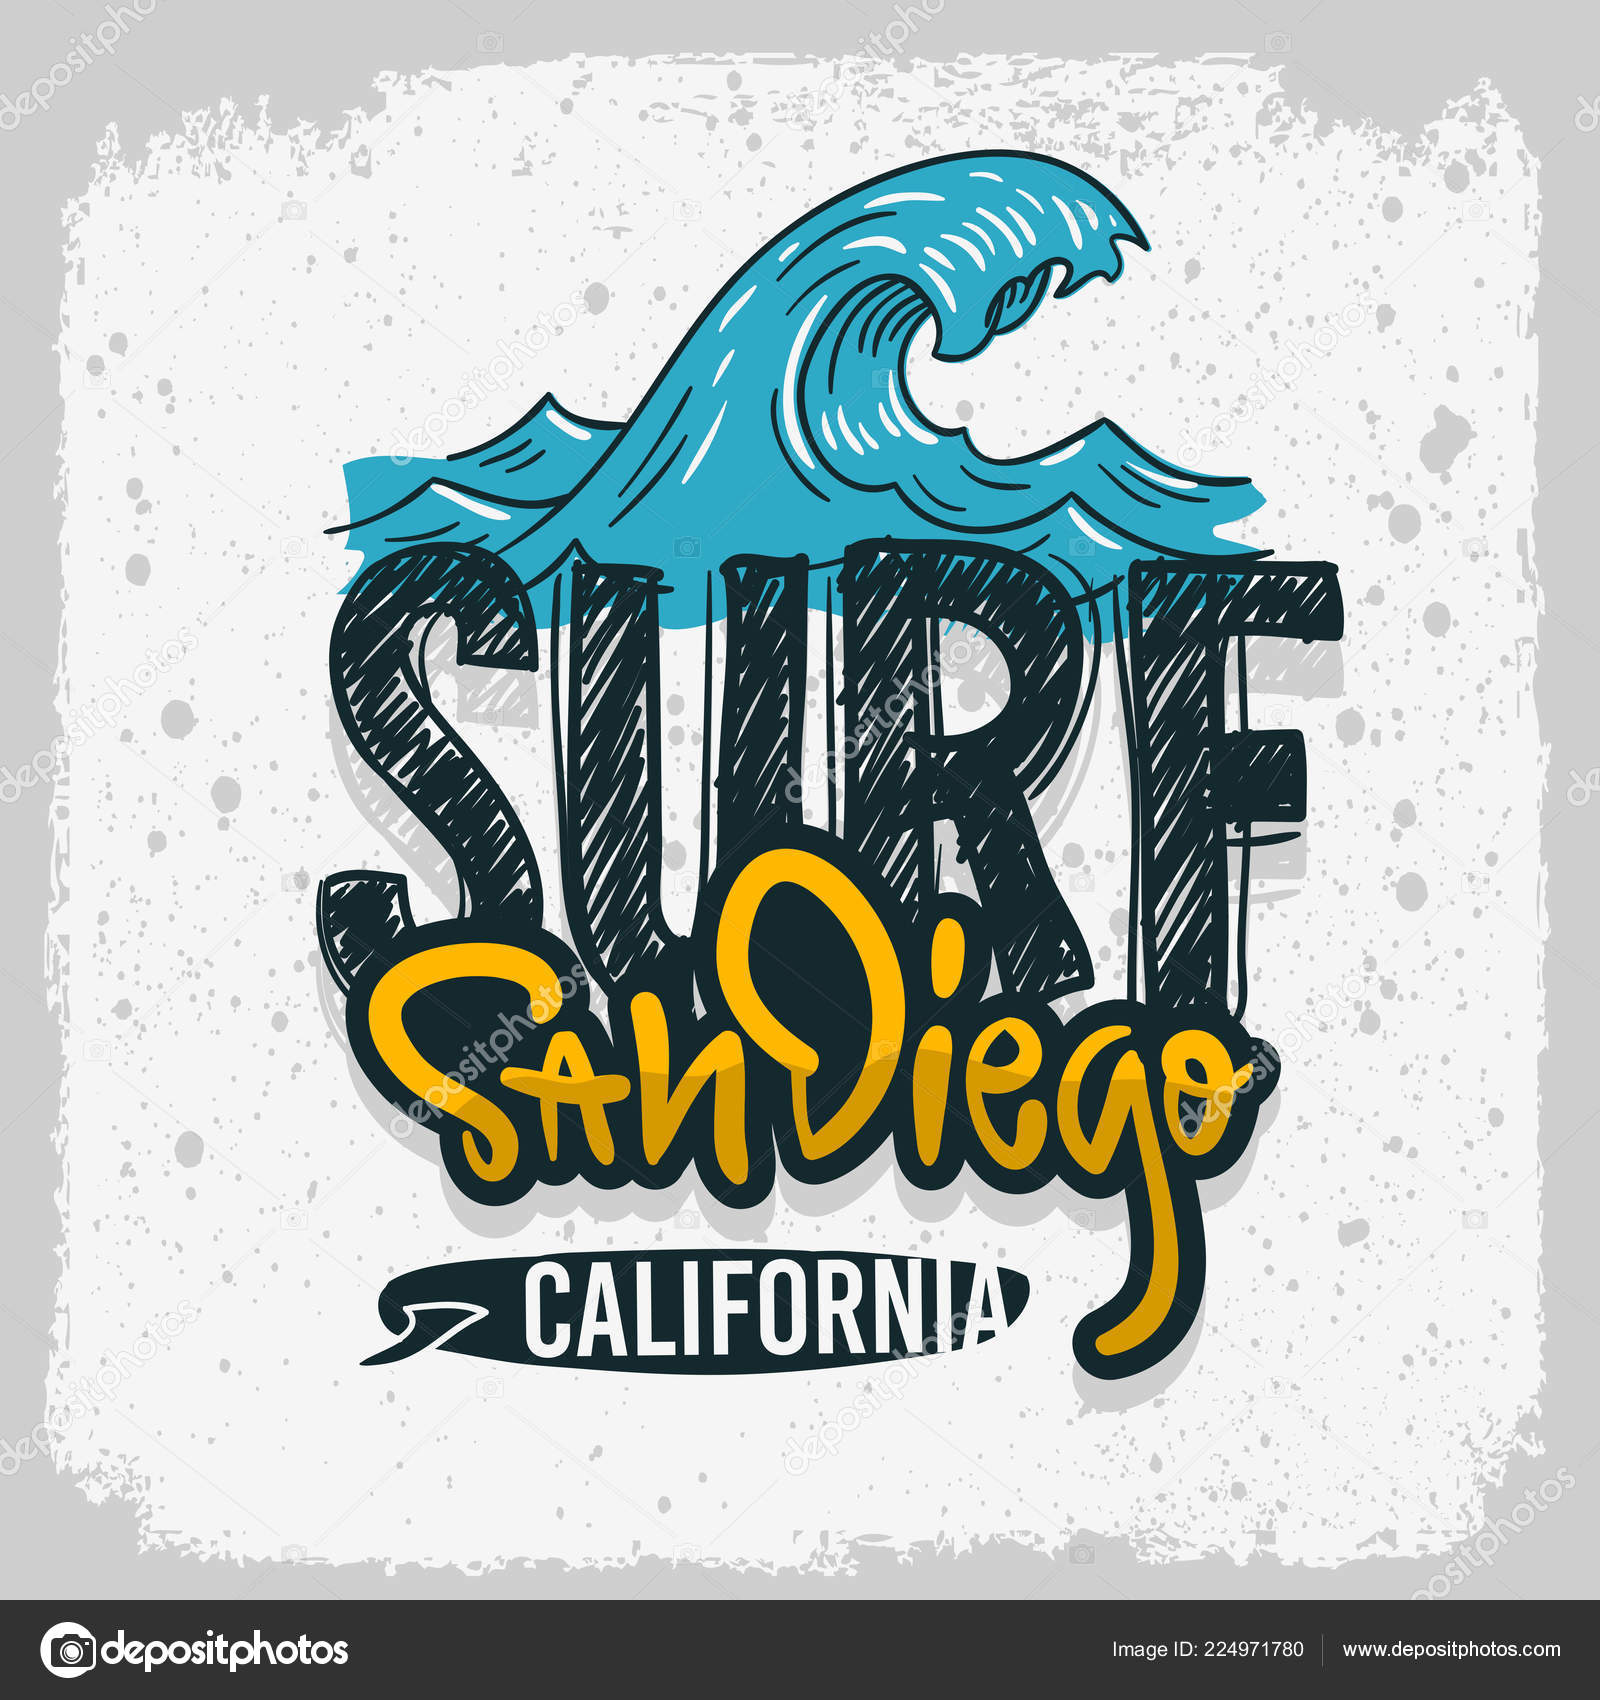 San Diego Califórnia Surf Surf Design Hand Drawn Lettering Type Logo Sign  Label for Promotion Anúncios t-shirt ou adesivo Poster Vector Imagem imagem  vetorial de Anton345© 224971780